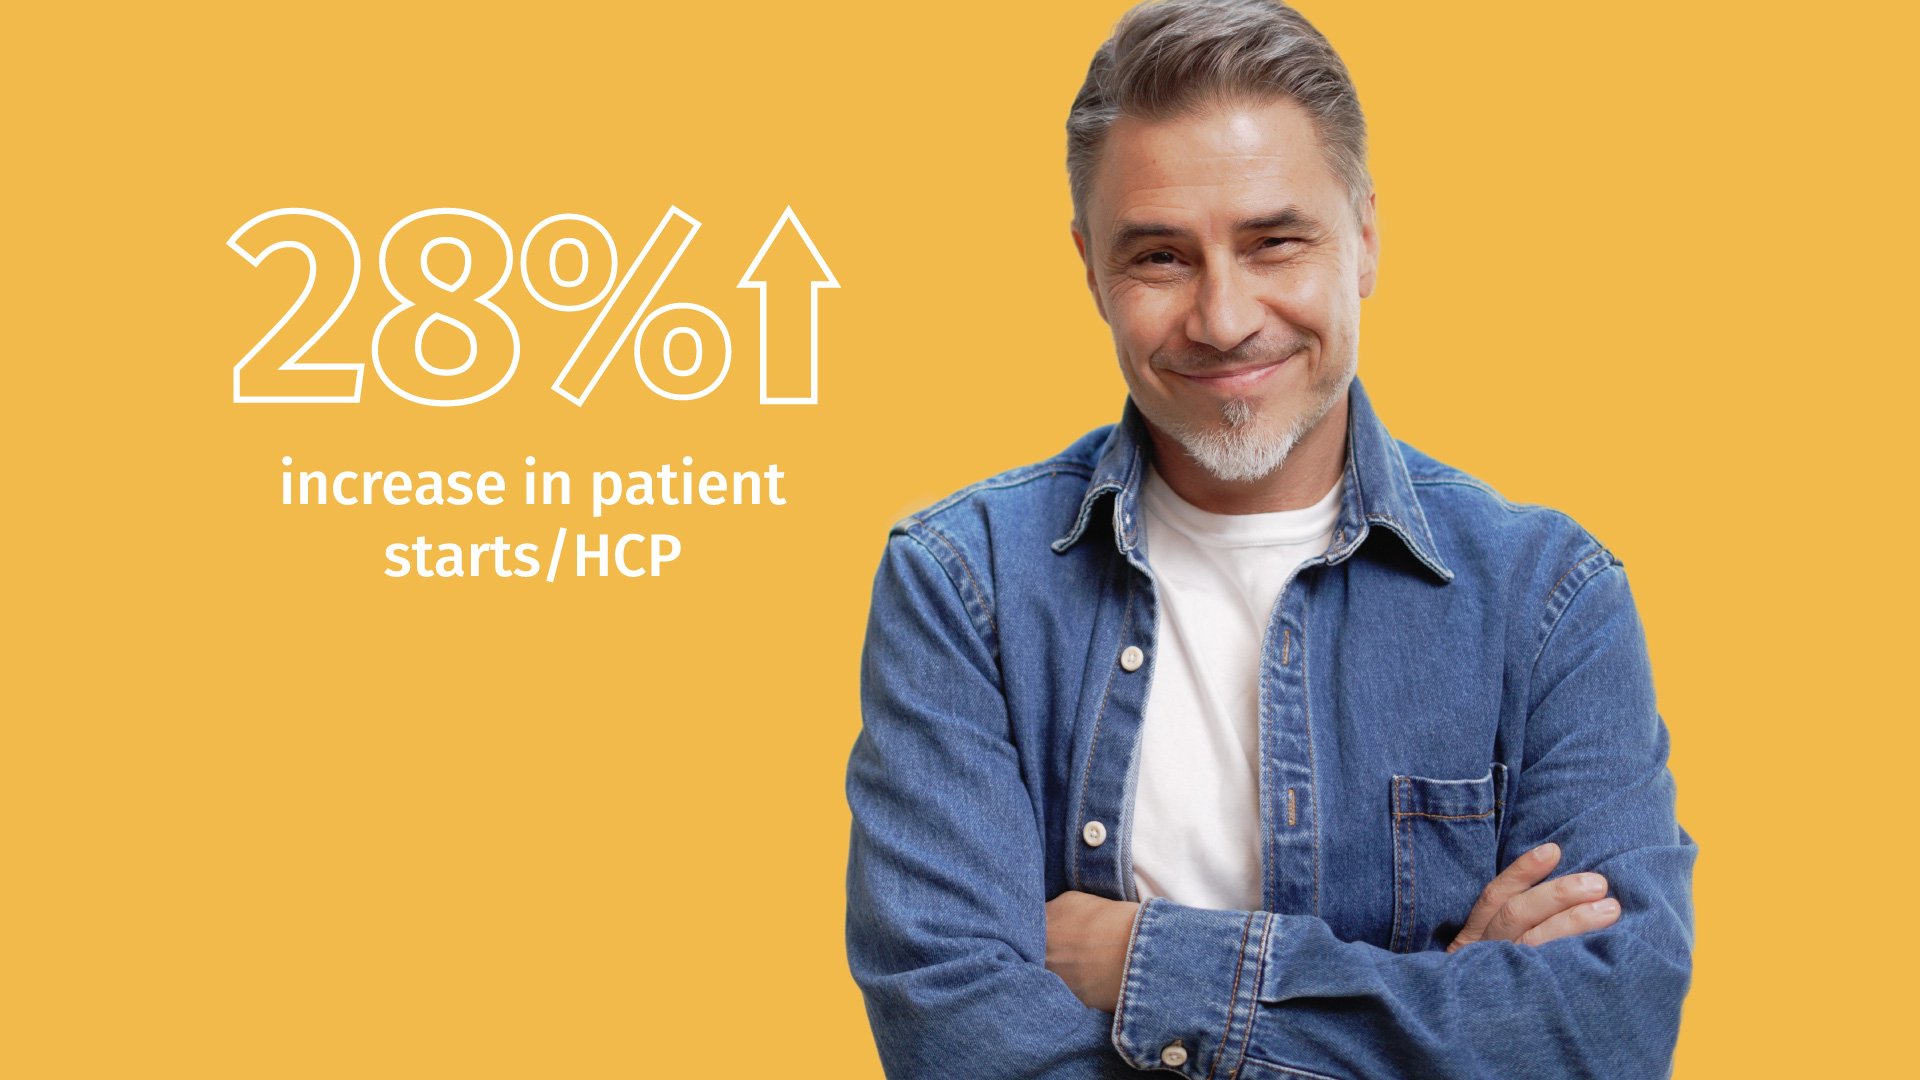 28% increase in patient starts/HCP patient